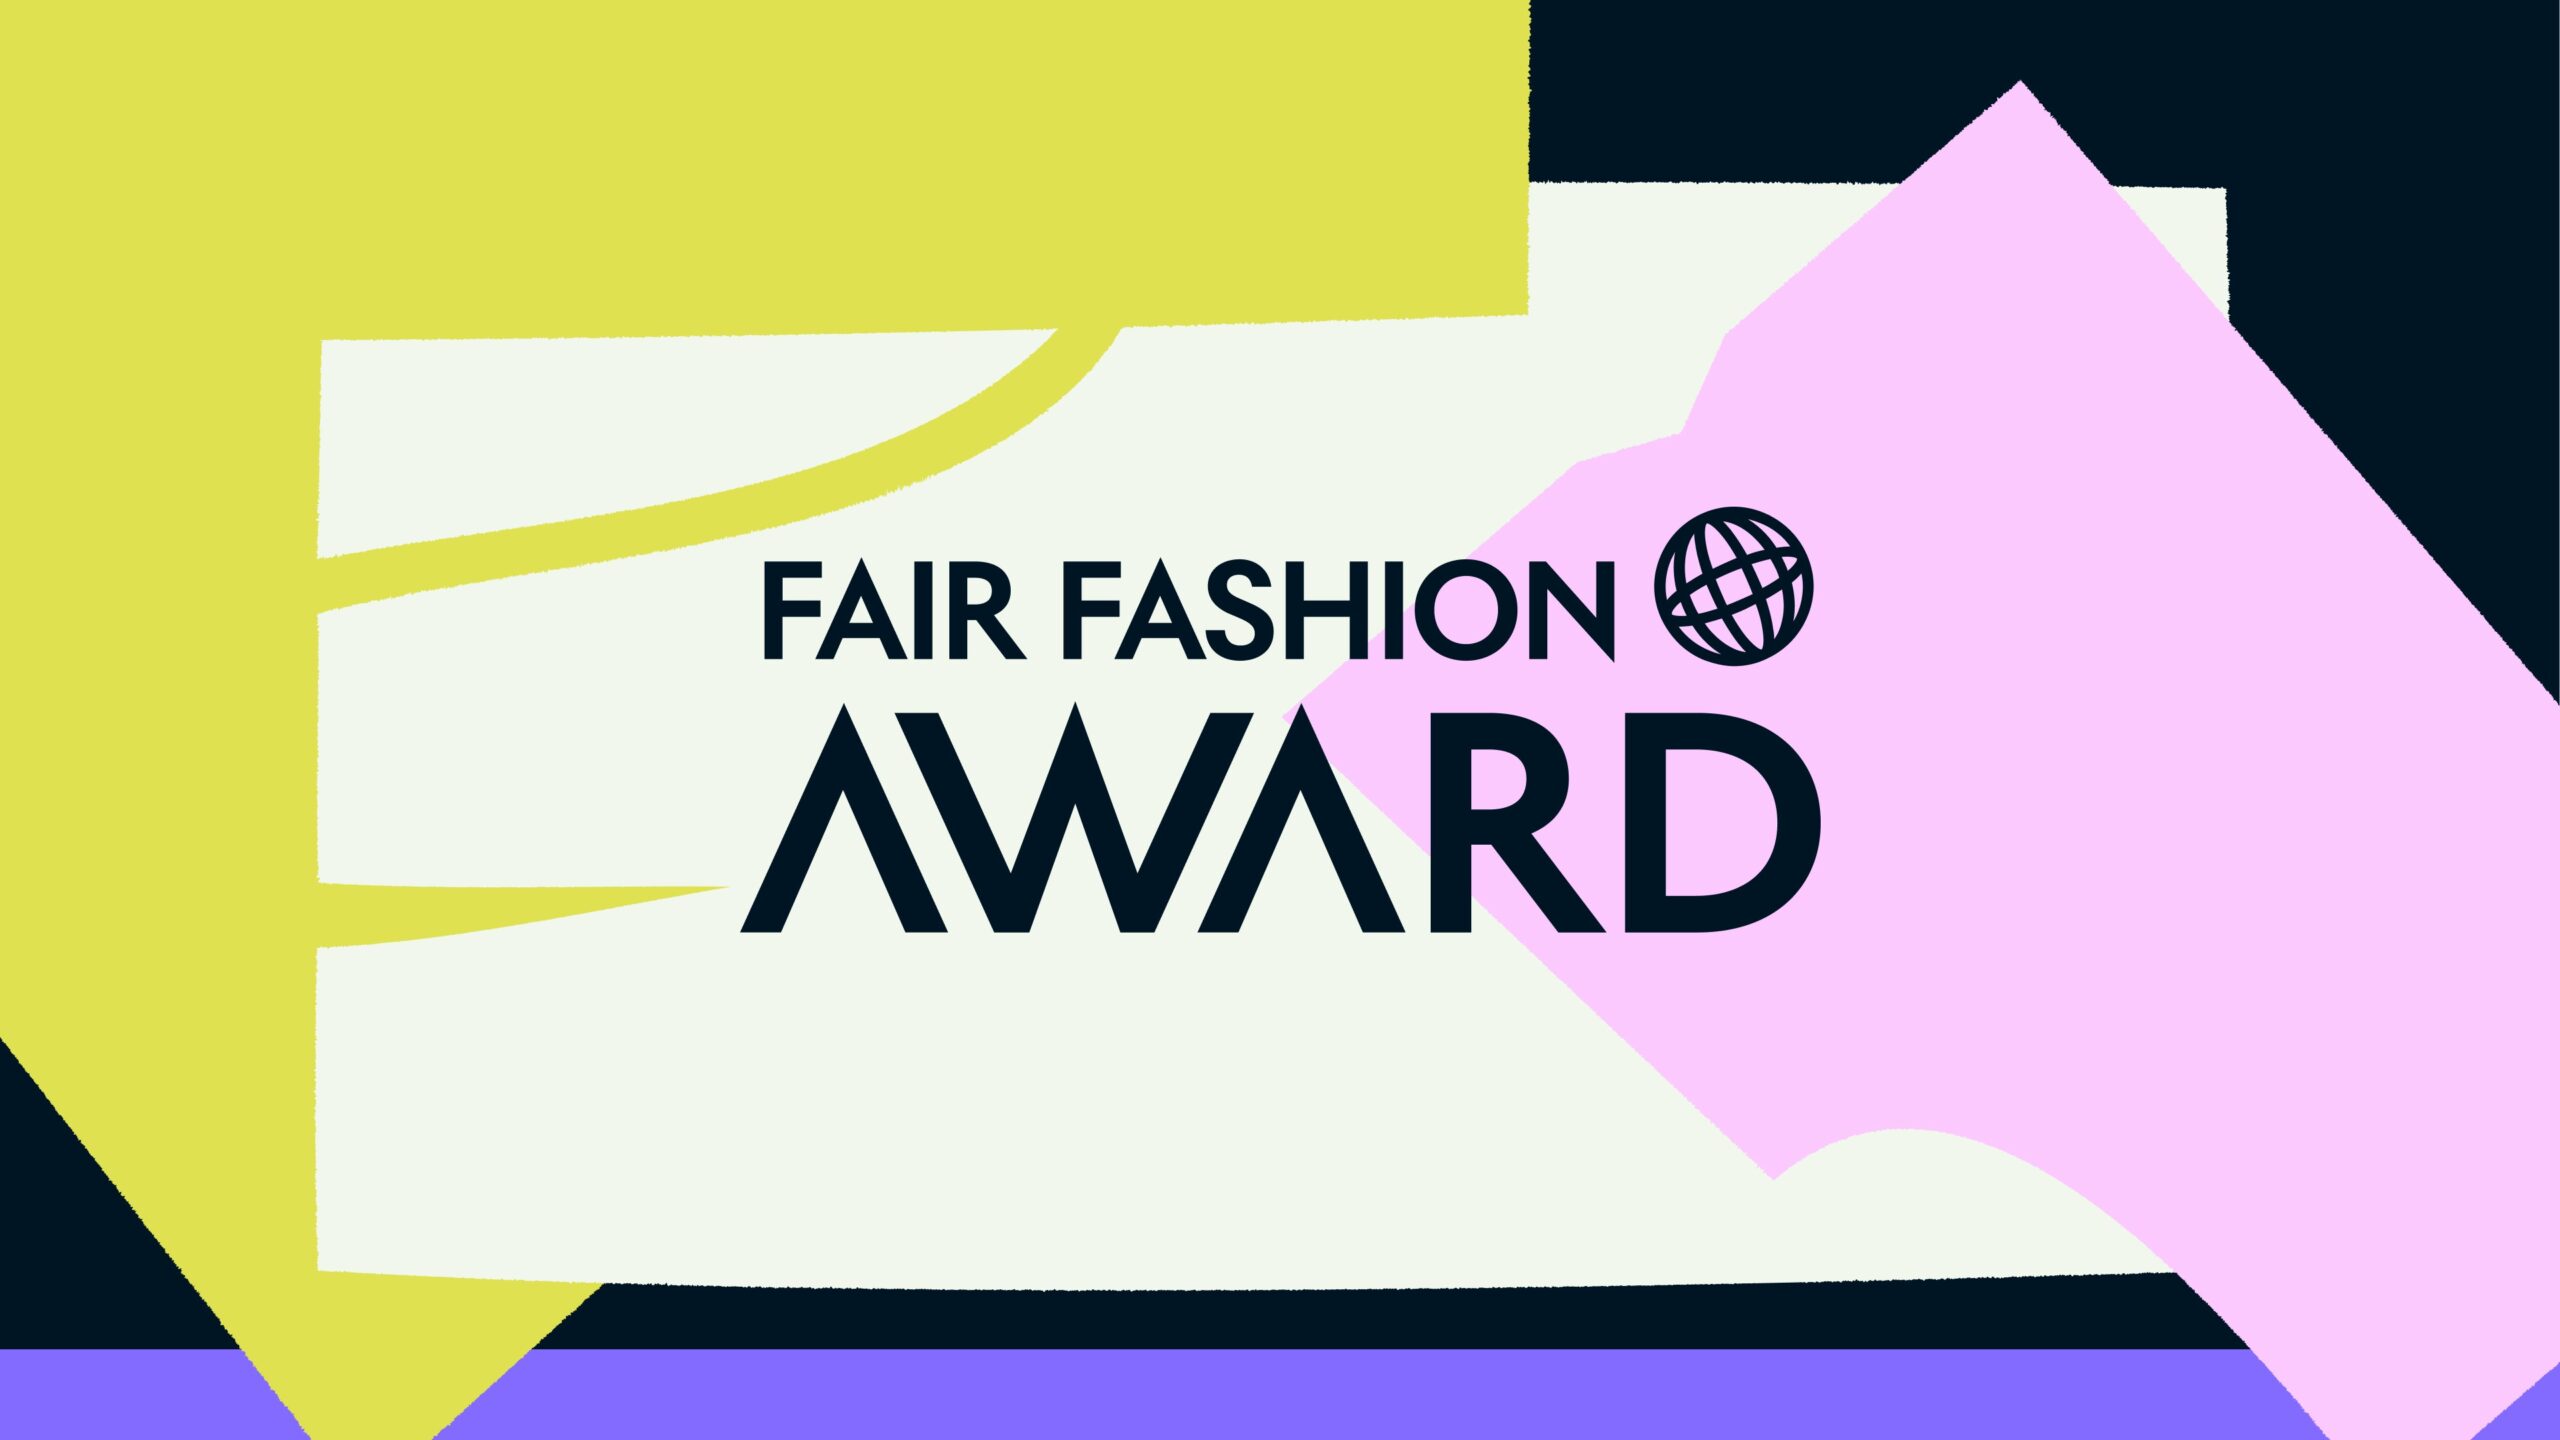 Fair Fashion Award